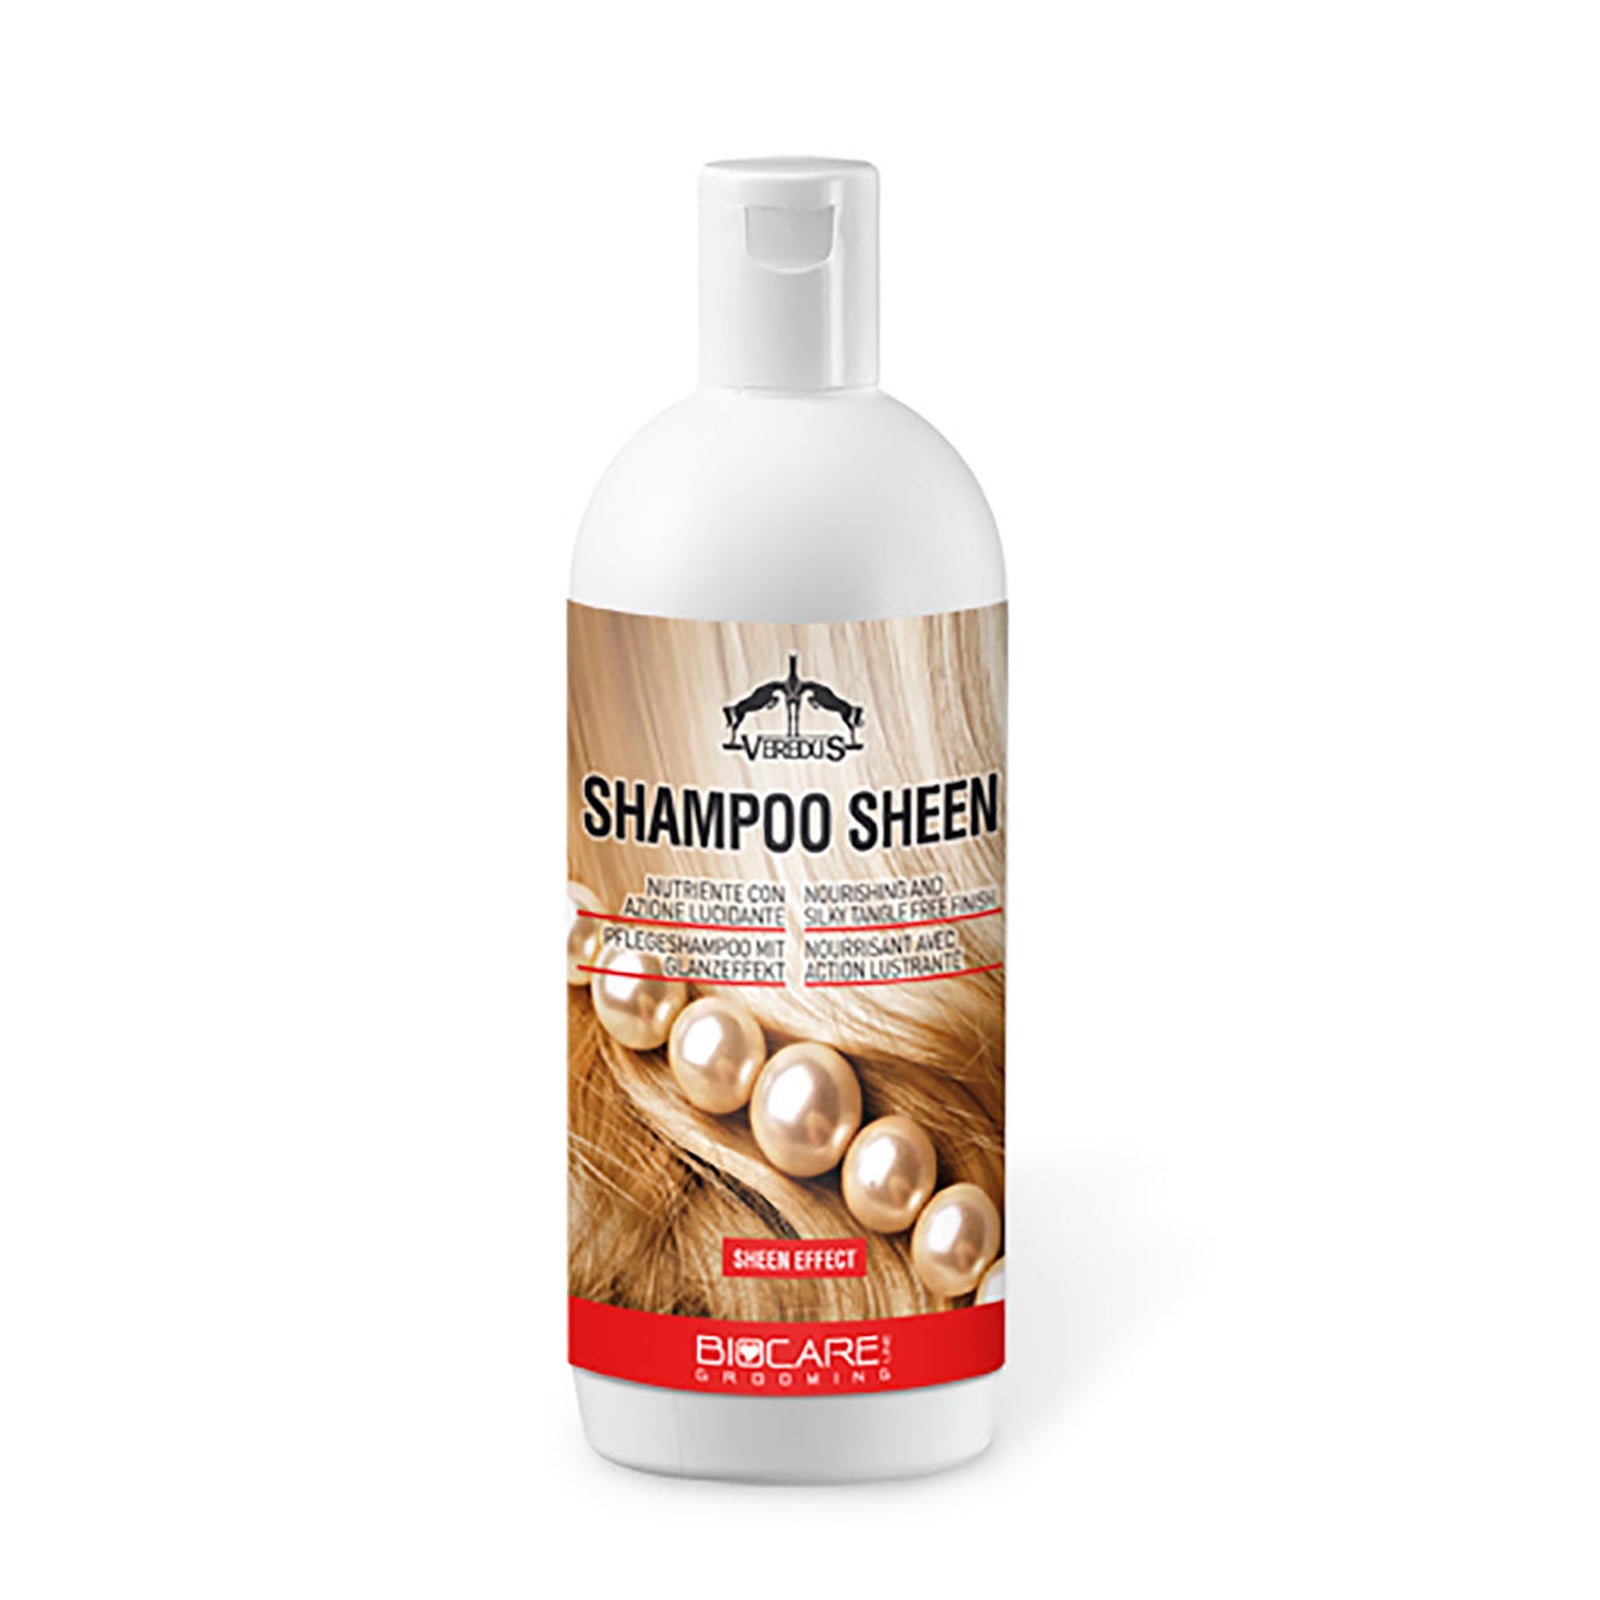 product shot image of the Shampoo Sheen